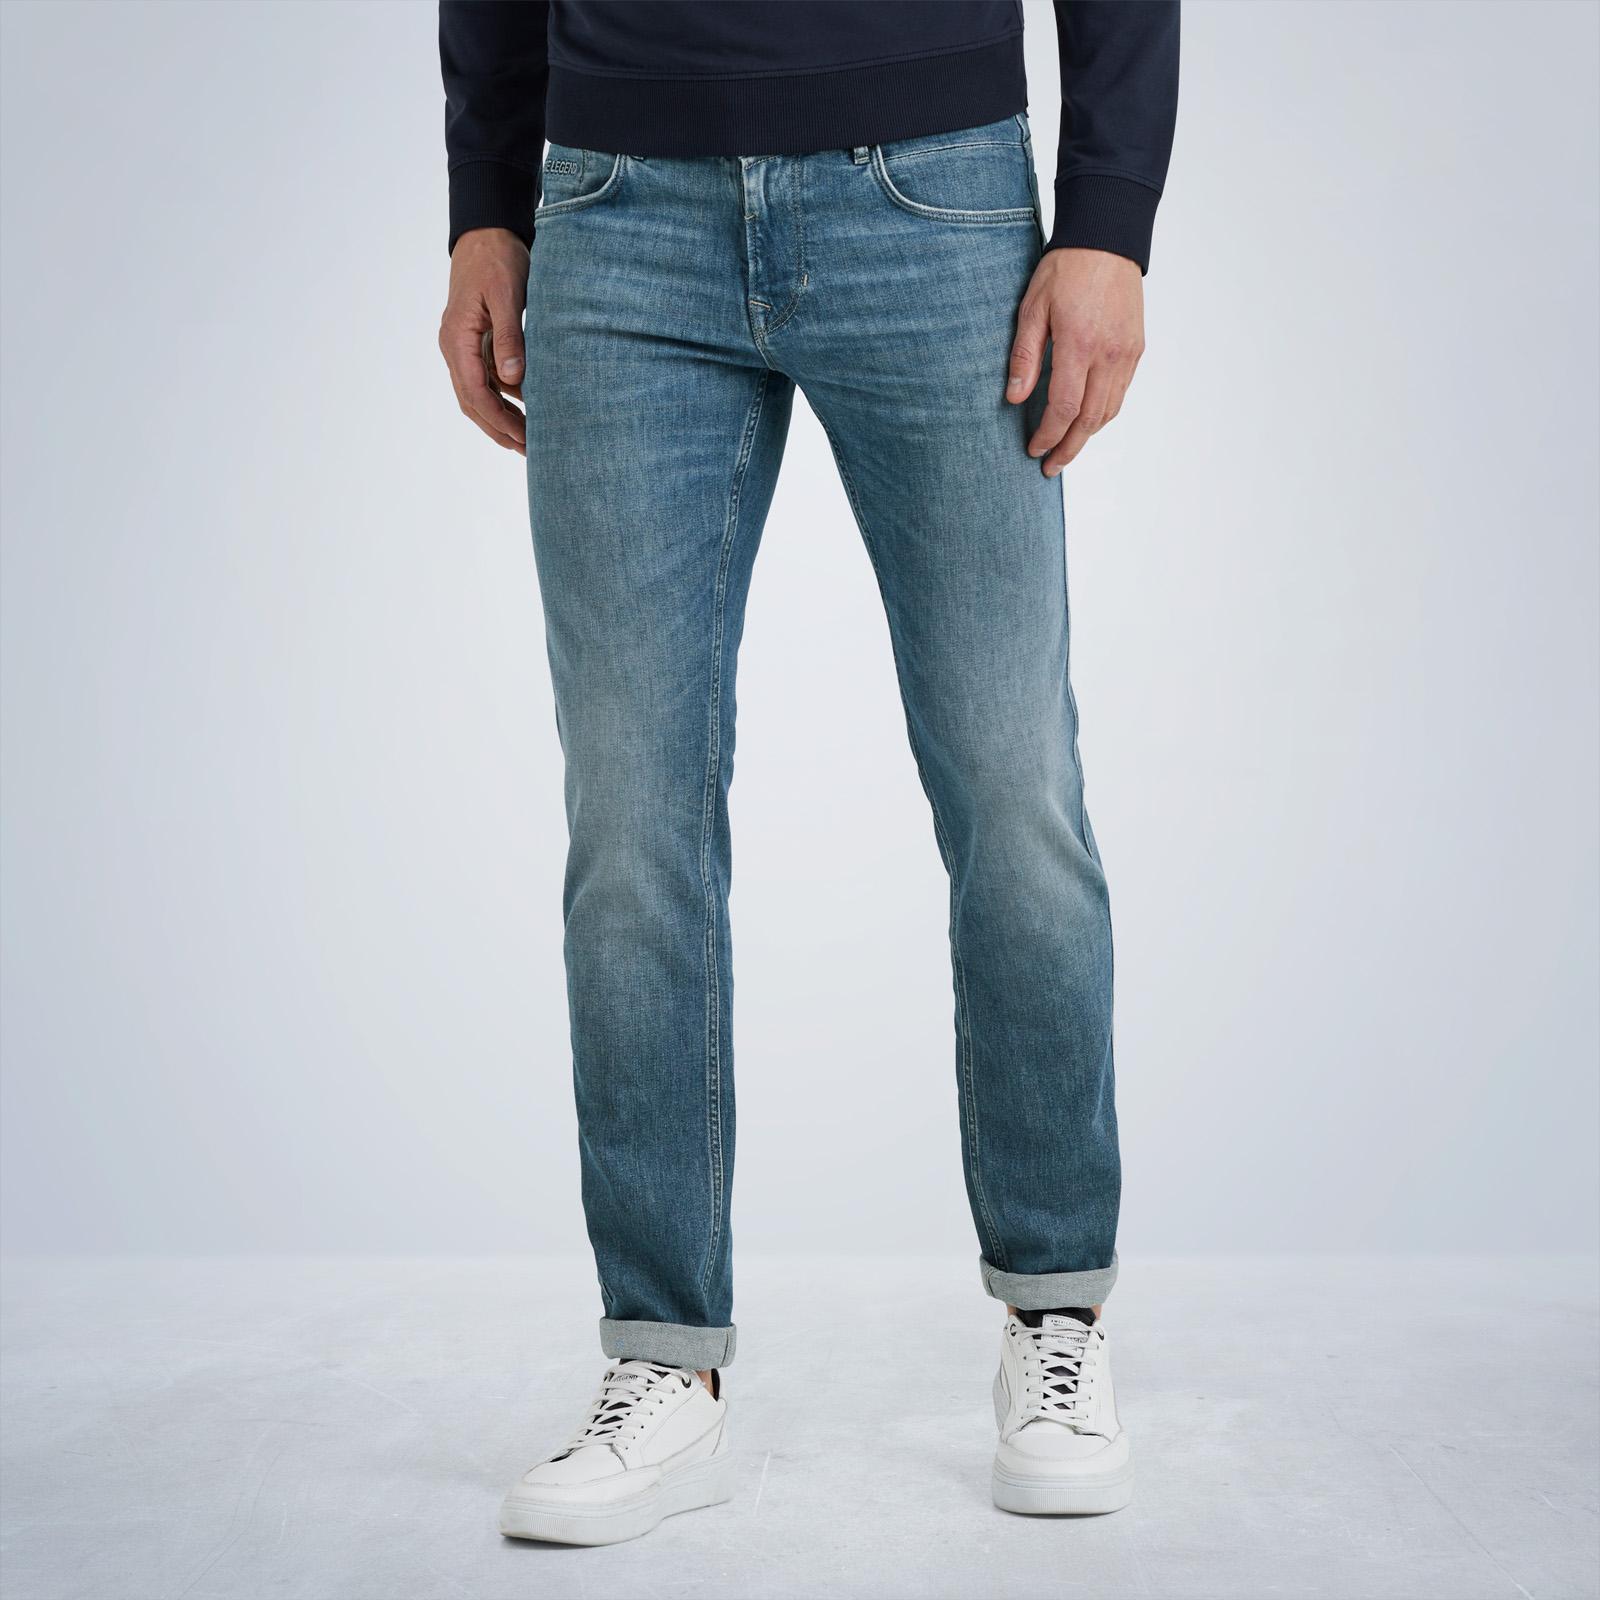 PME Legend Nightflight Regular Fit Jeans product